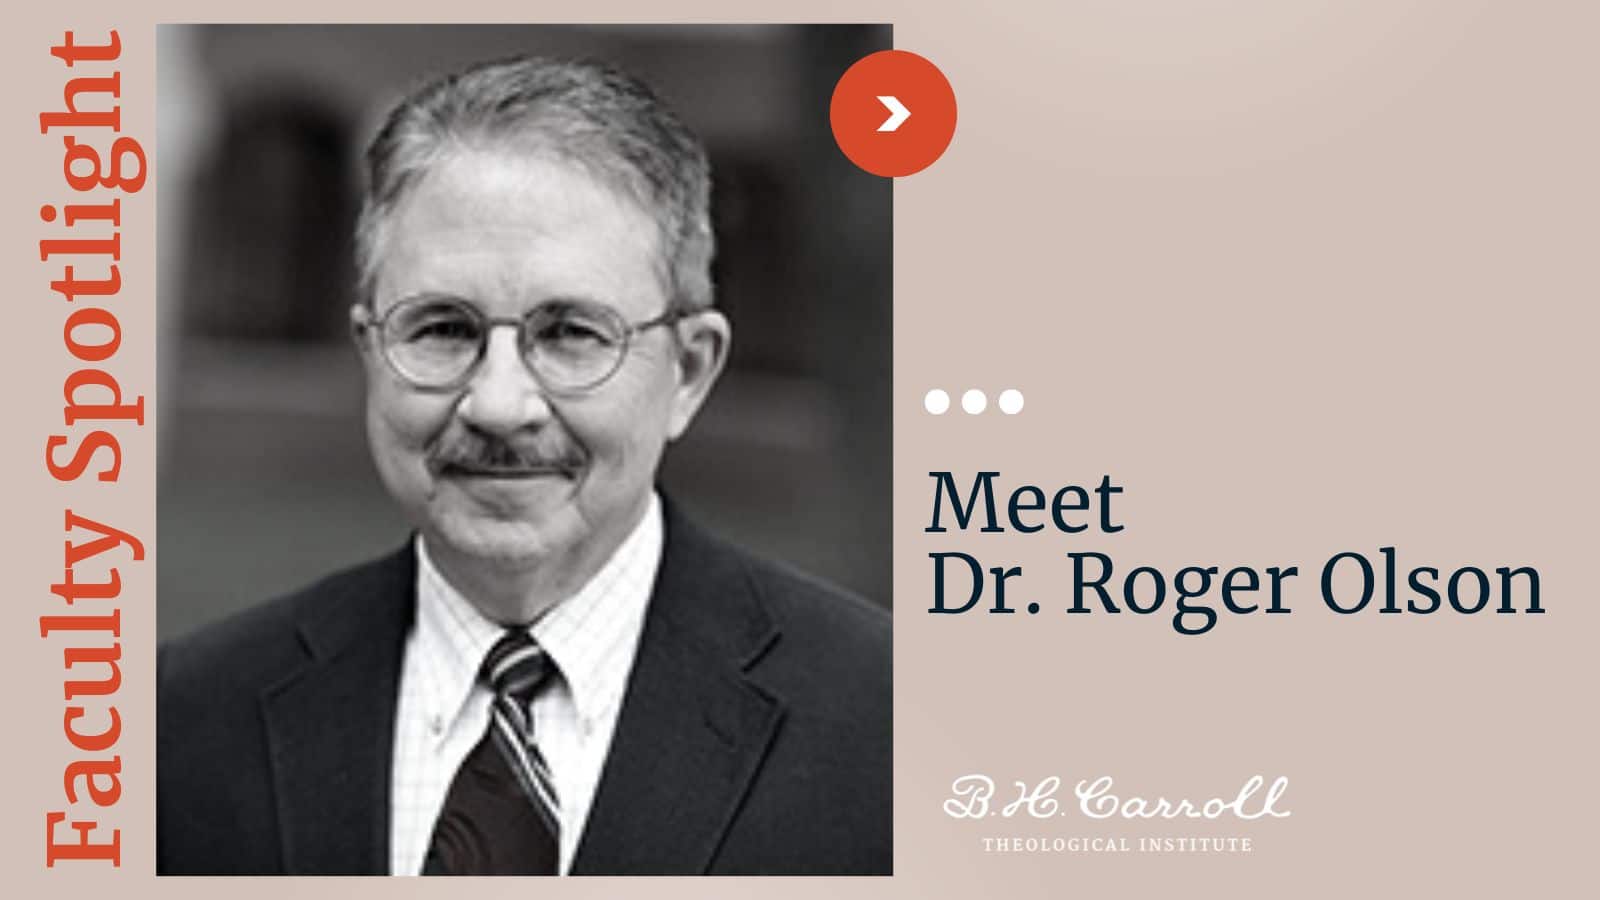 Dr. Roger Olson